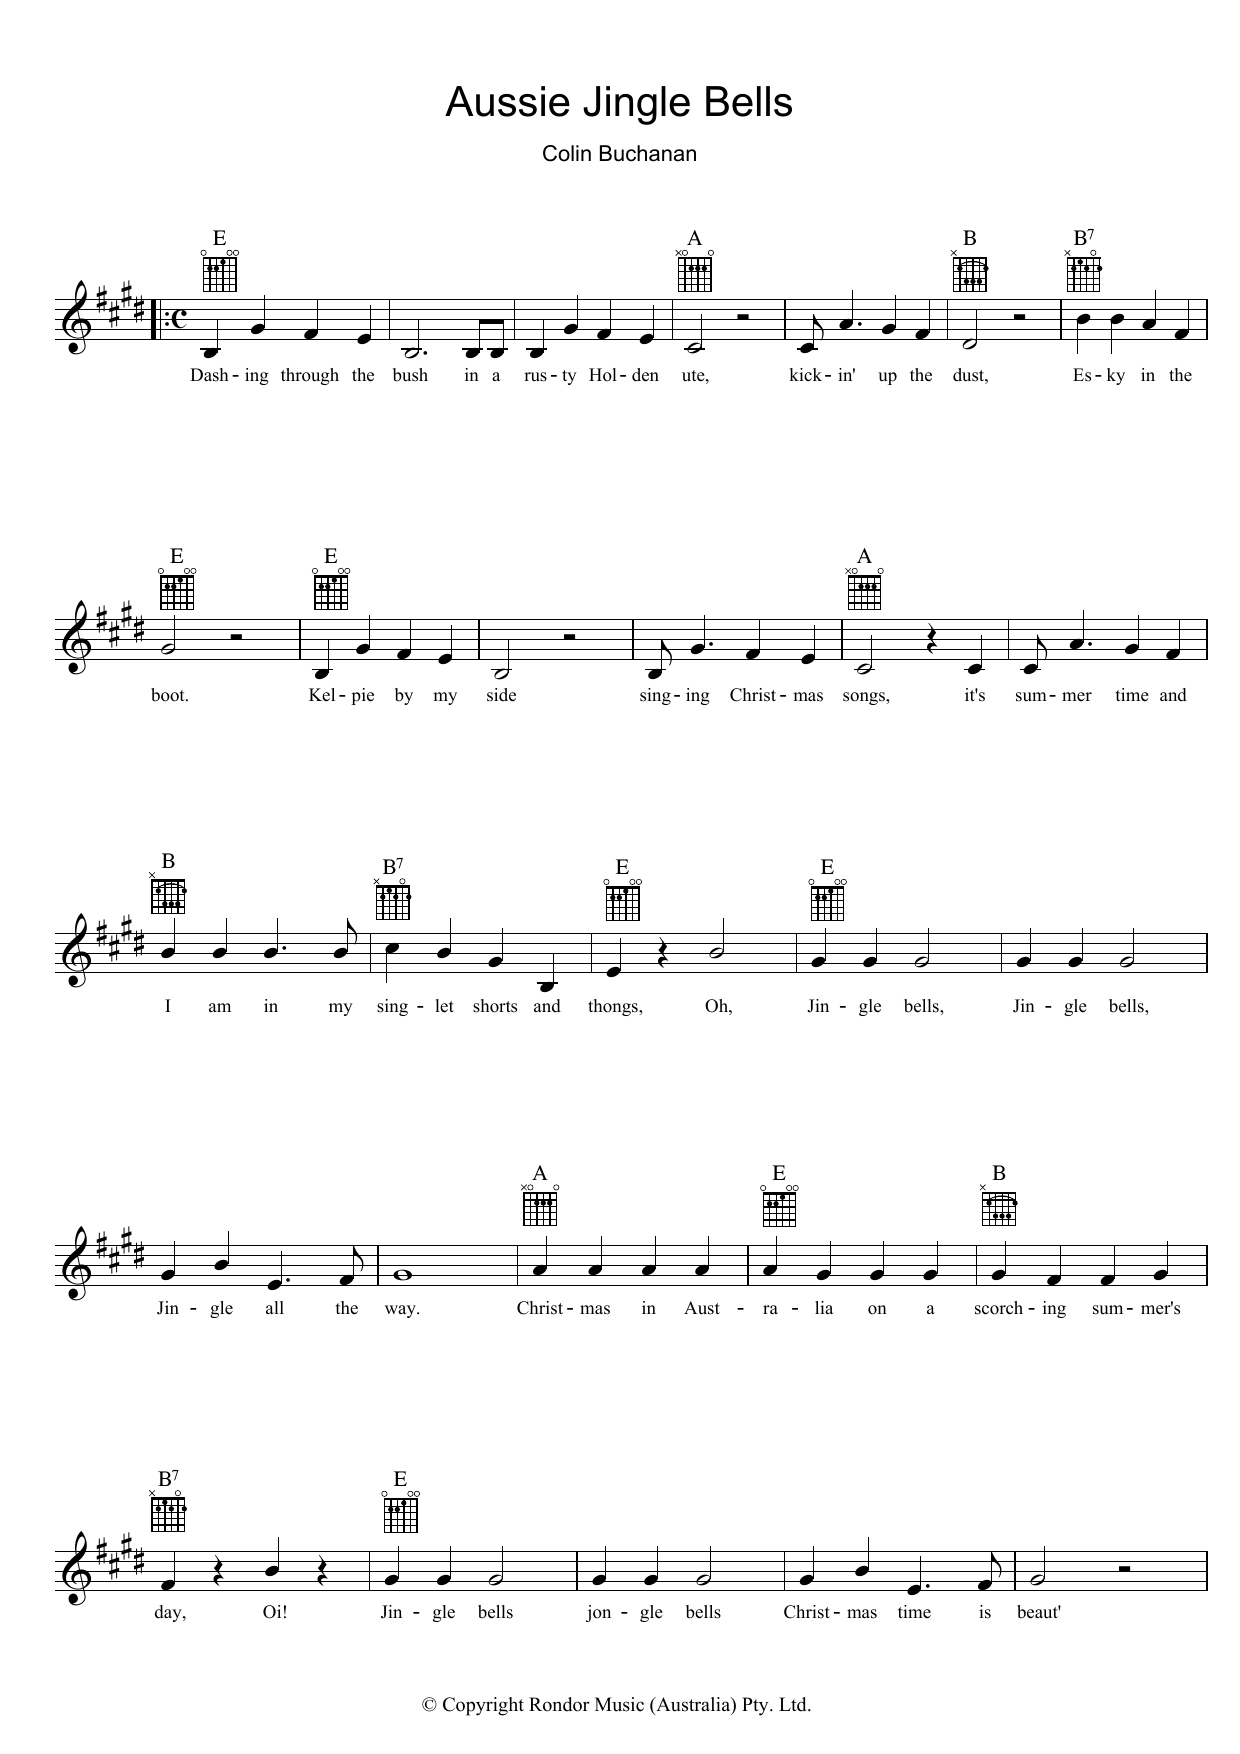 Colin Buchanan Aussie Jingle Bells Sheet Music Notes & Chords for Melody Line, Lyrics & Chords - Download or Print PDF